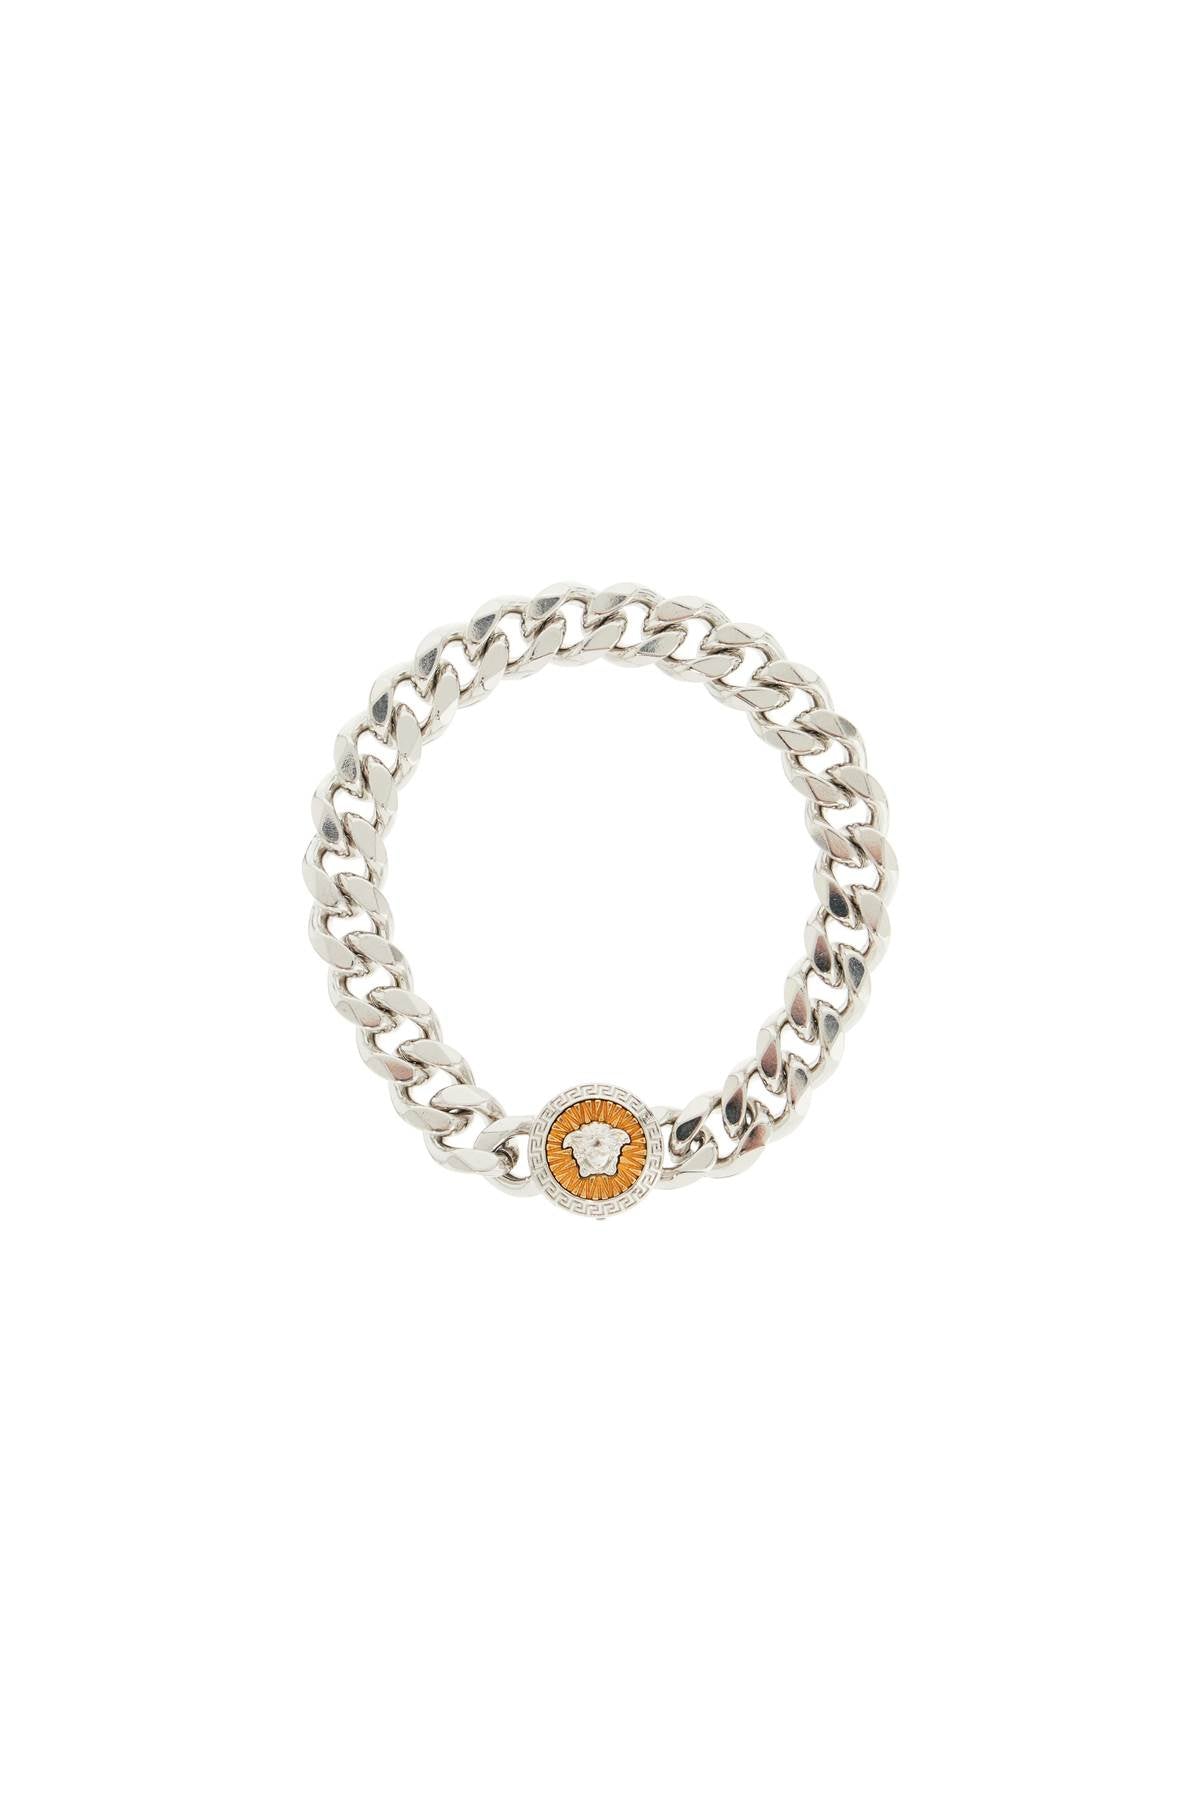 "chain bracelet with medusa charm-0